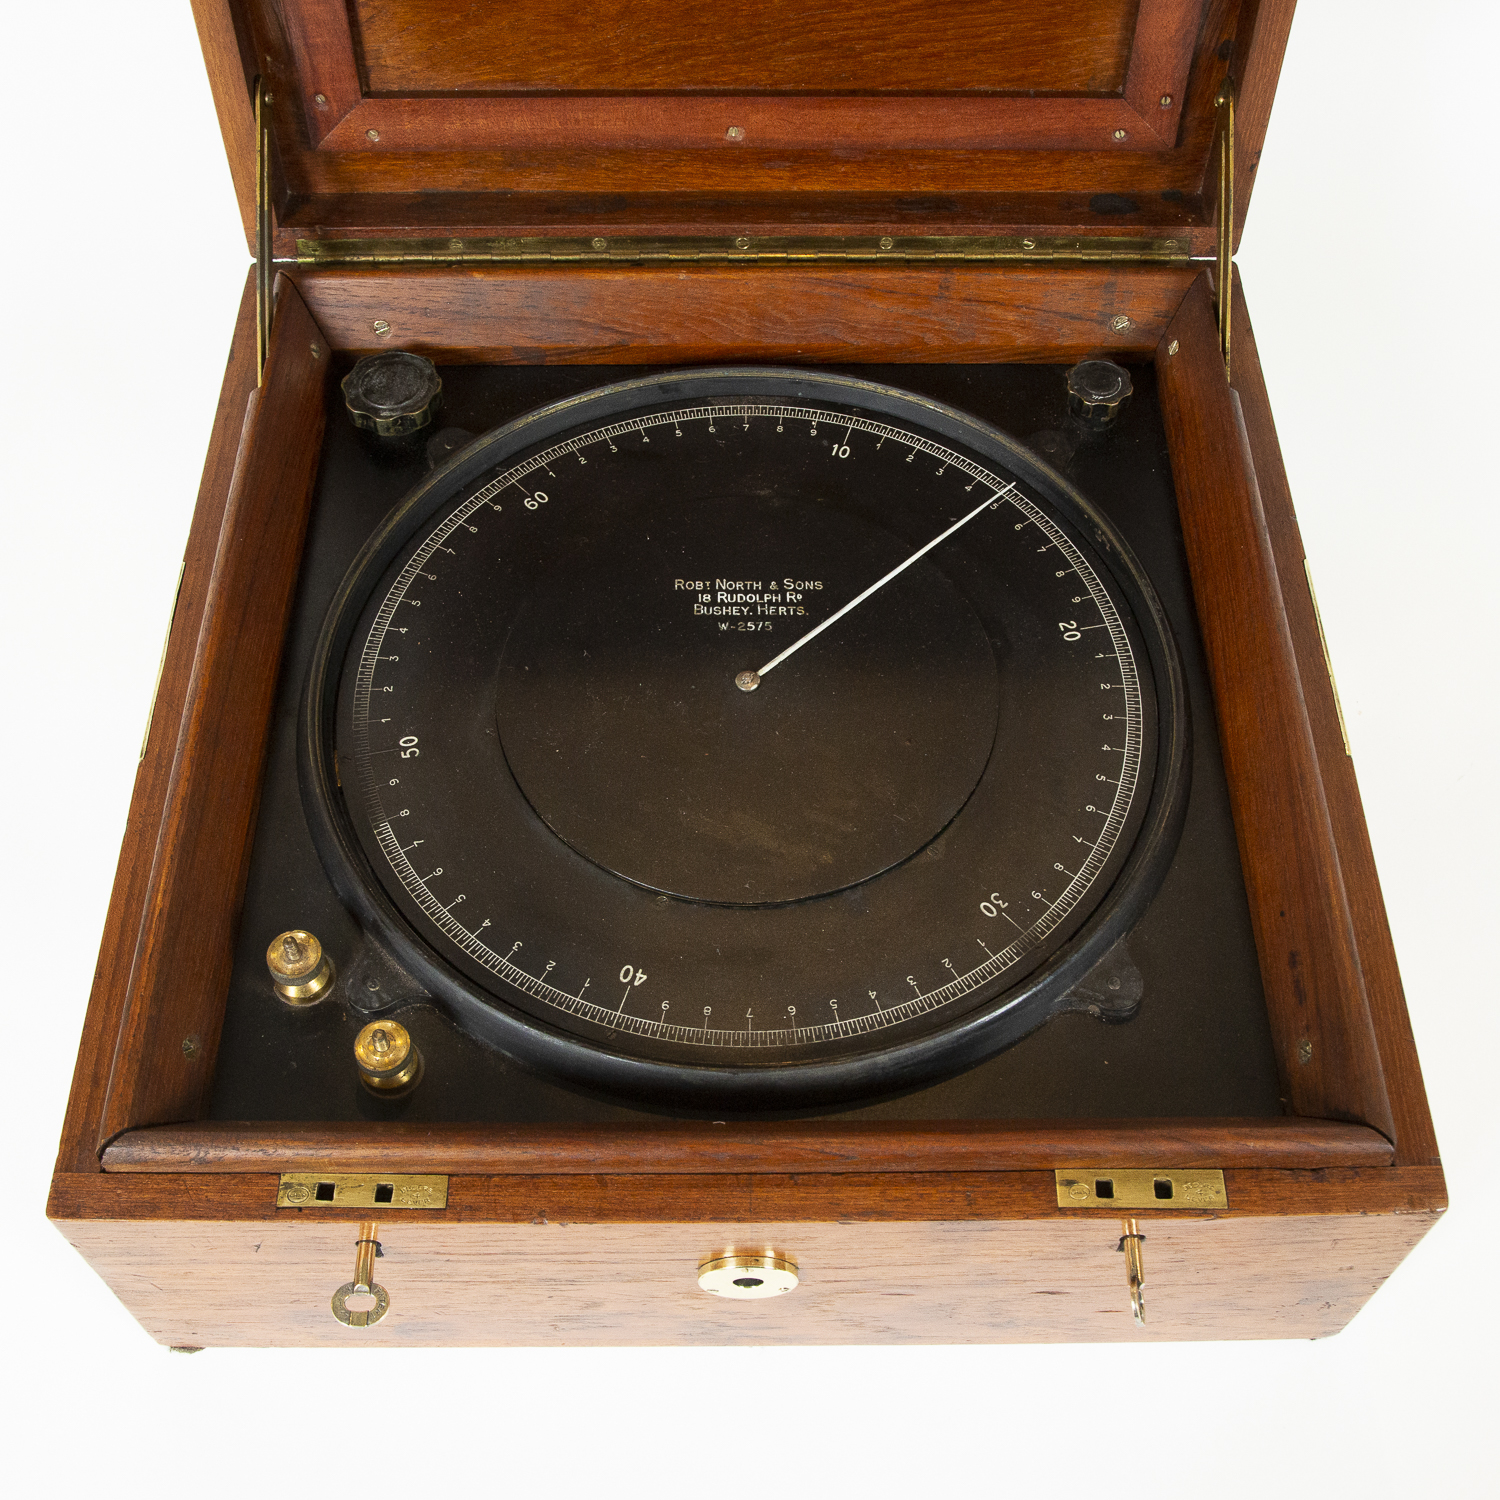 WWII torpedo timer designed by Charles Frodsham